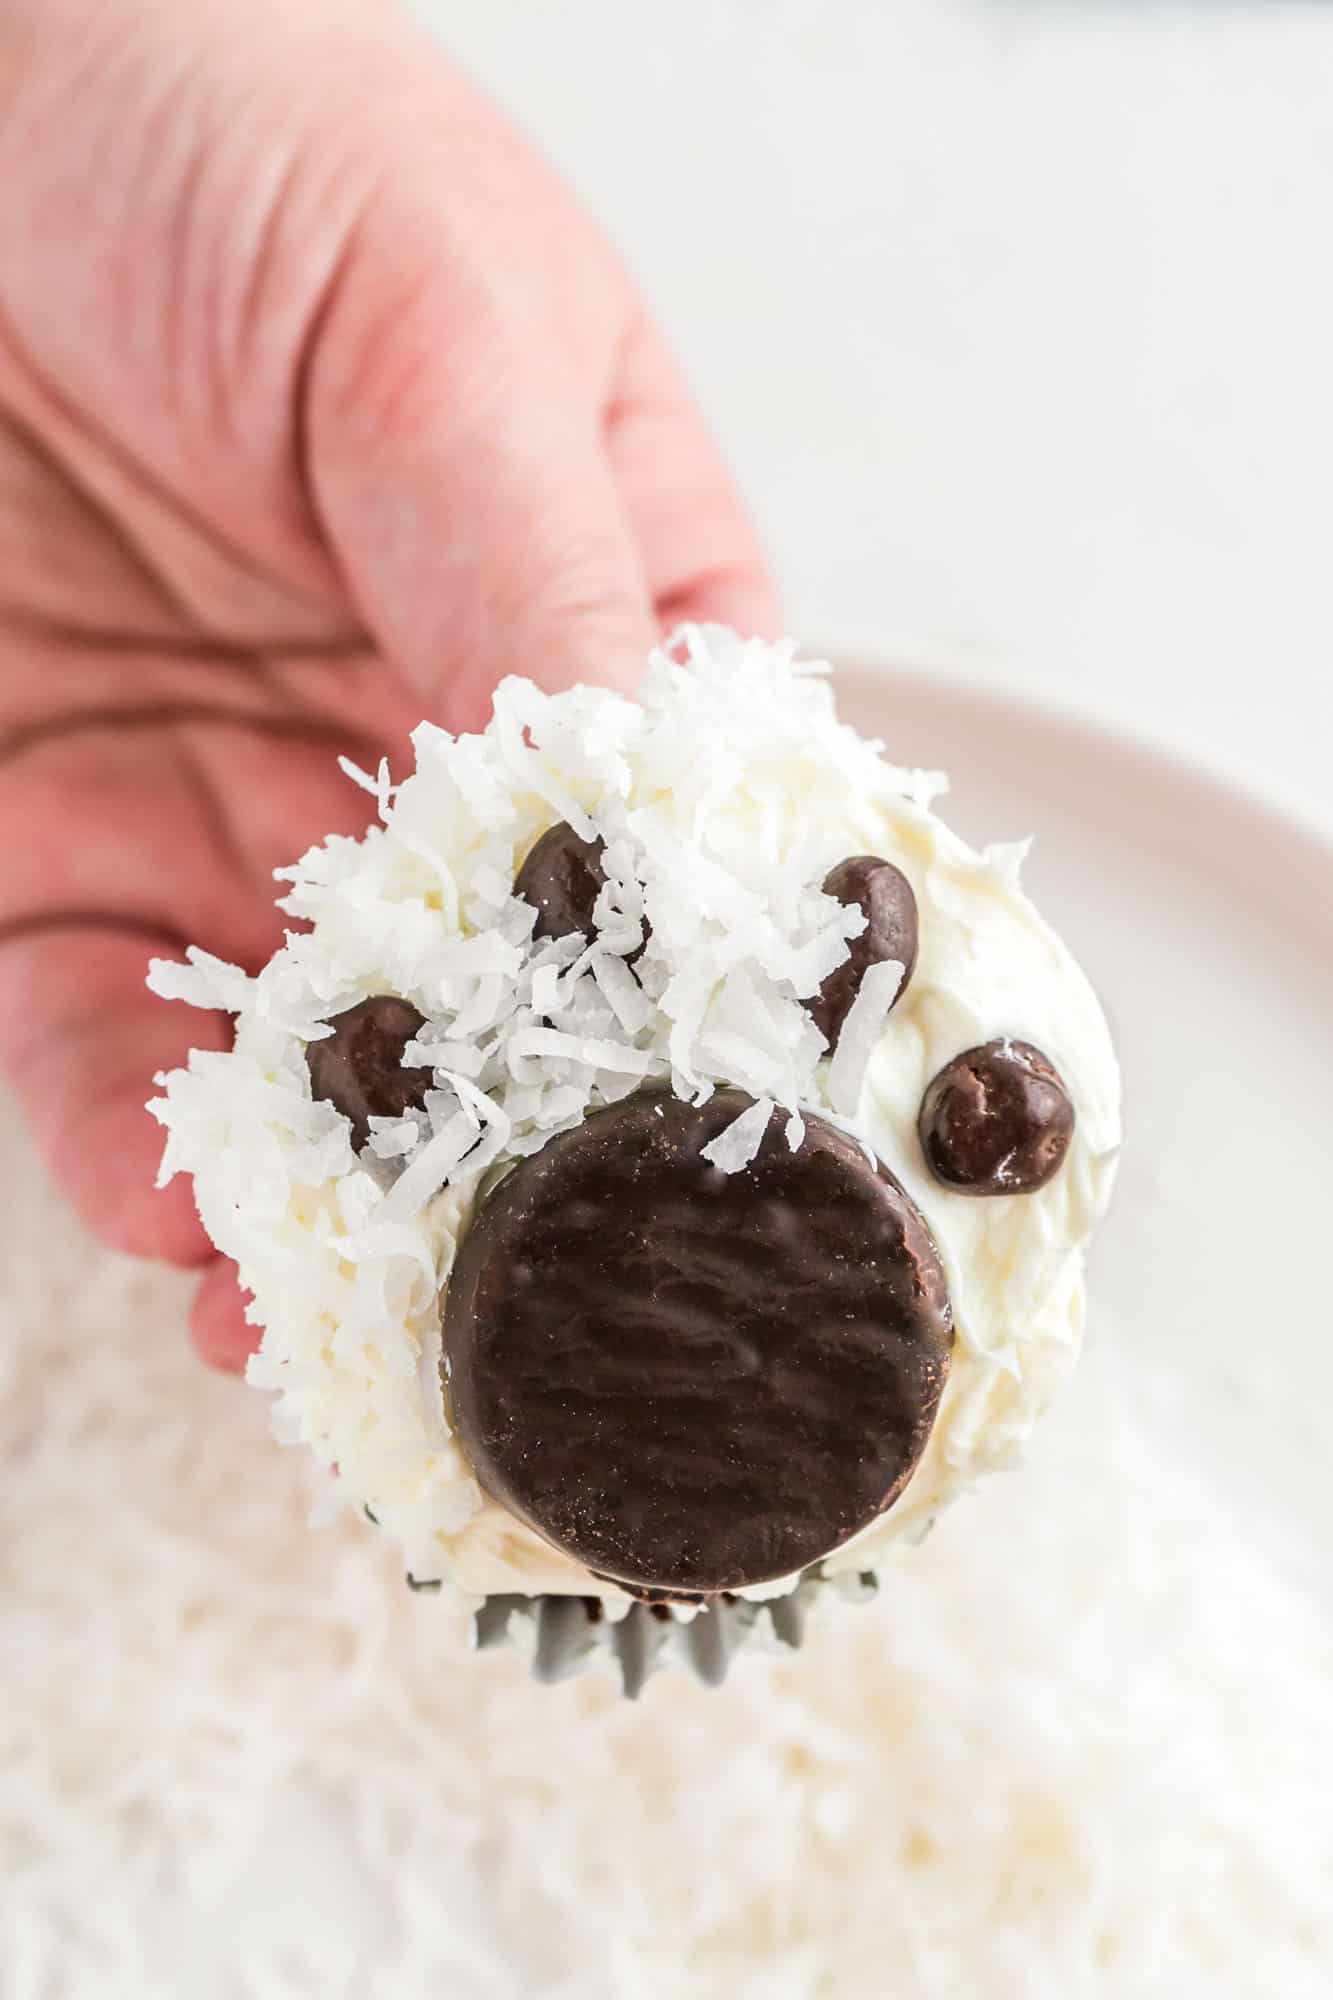 Dipping a polar bear cupcake in shredded coconut